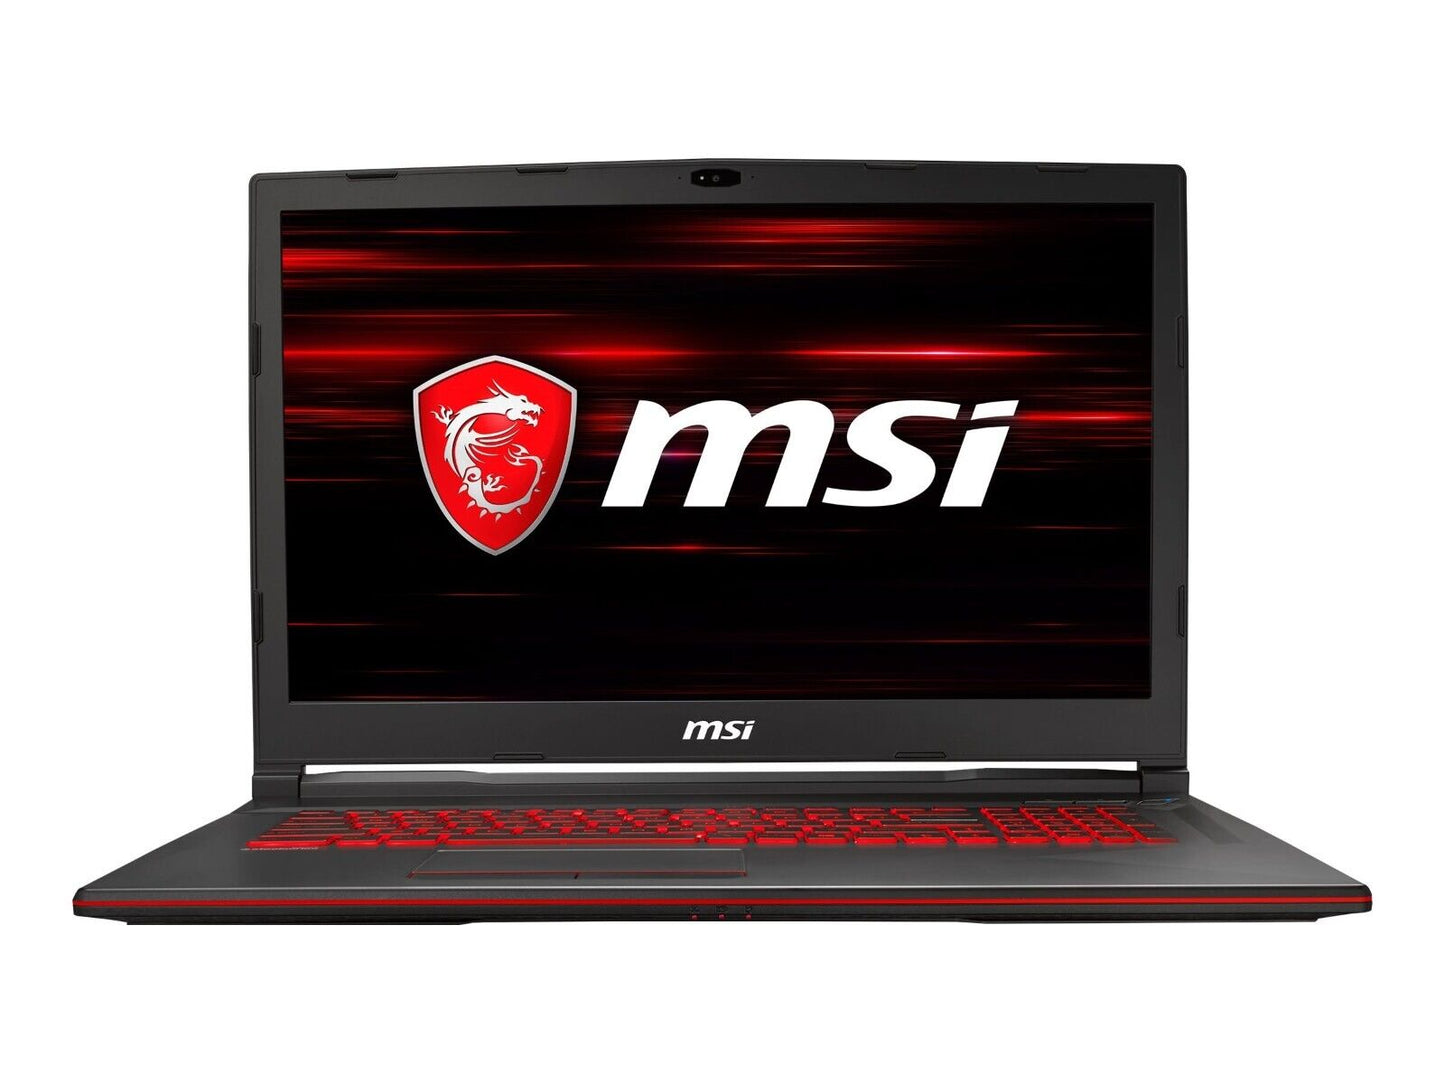 MSI GL63 Gaming Laptop 15.6", Intel Core i7-8750H - GL63 8RC-068US